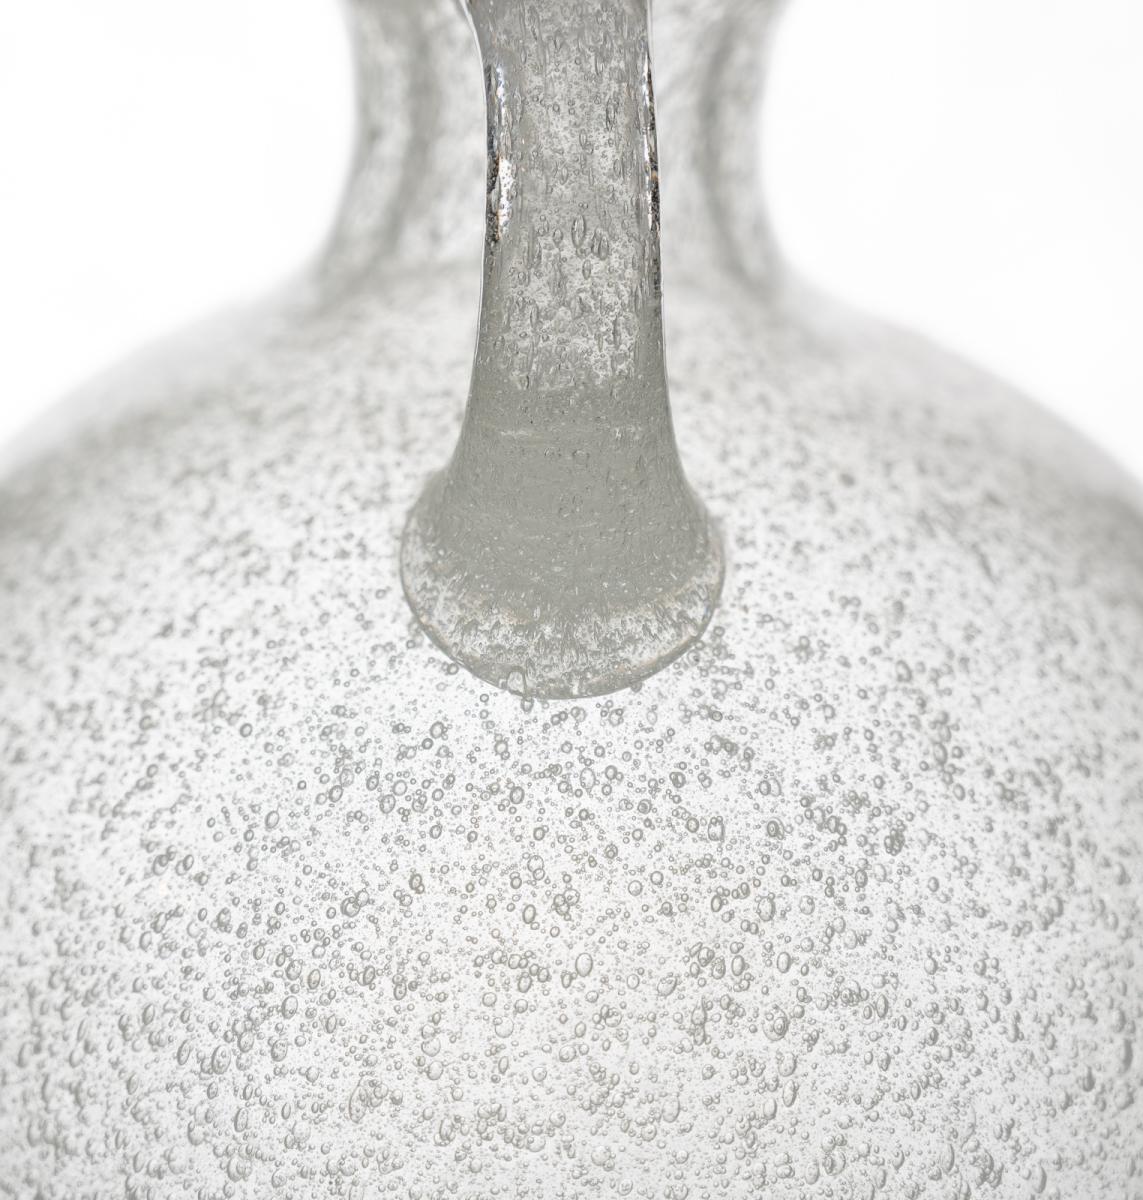 Pulegoso two-handled Seguso vase